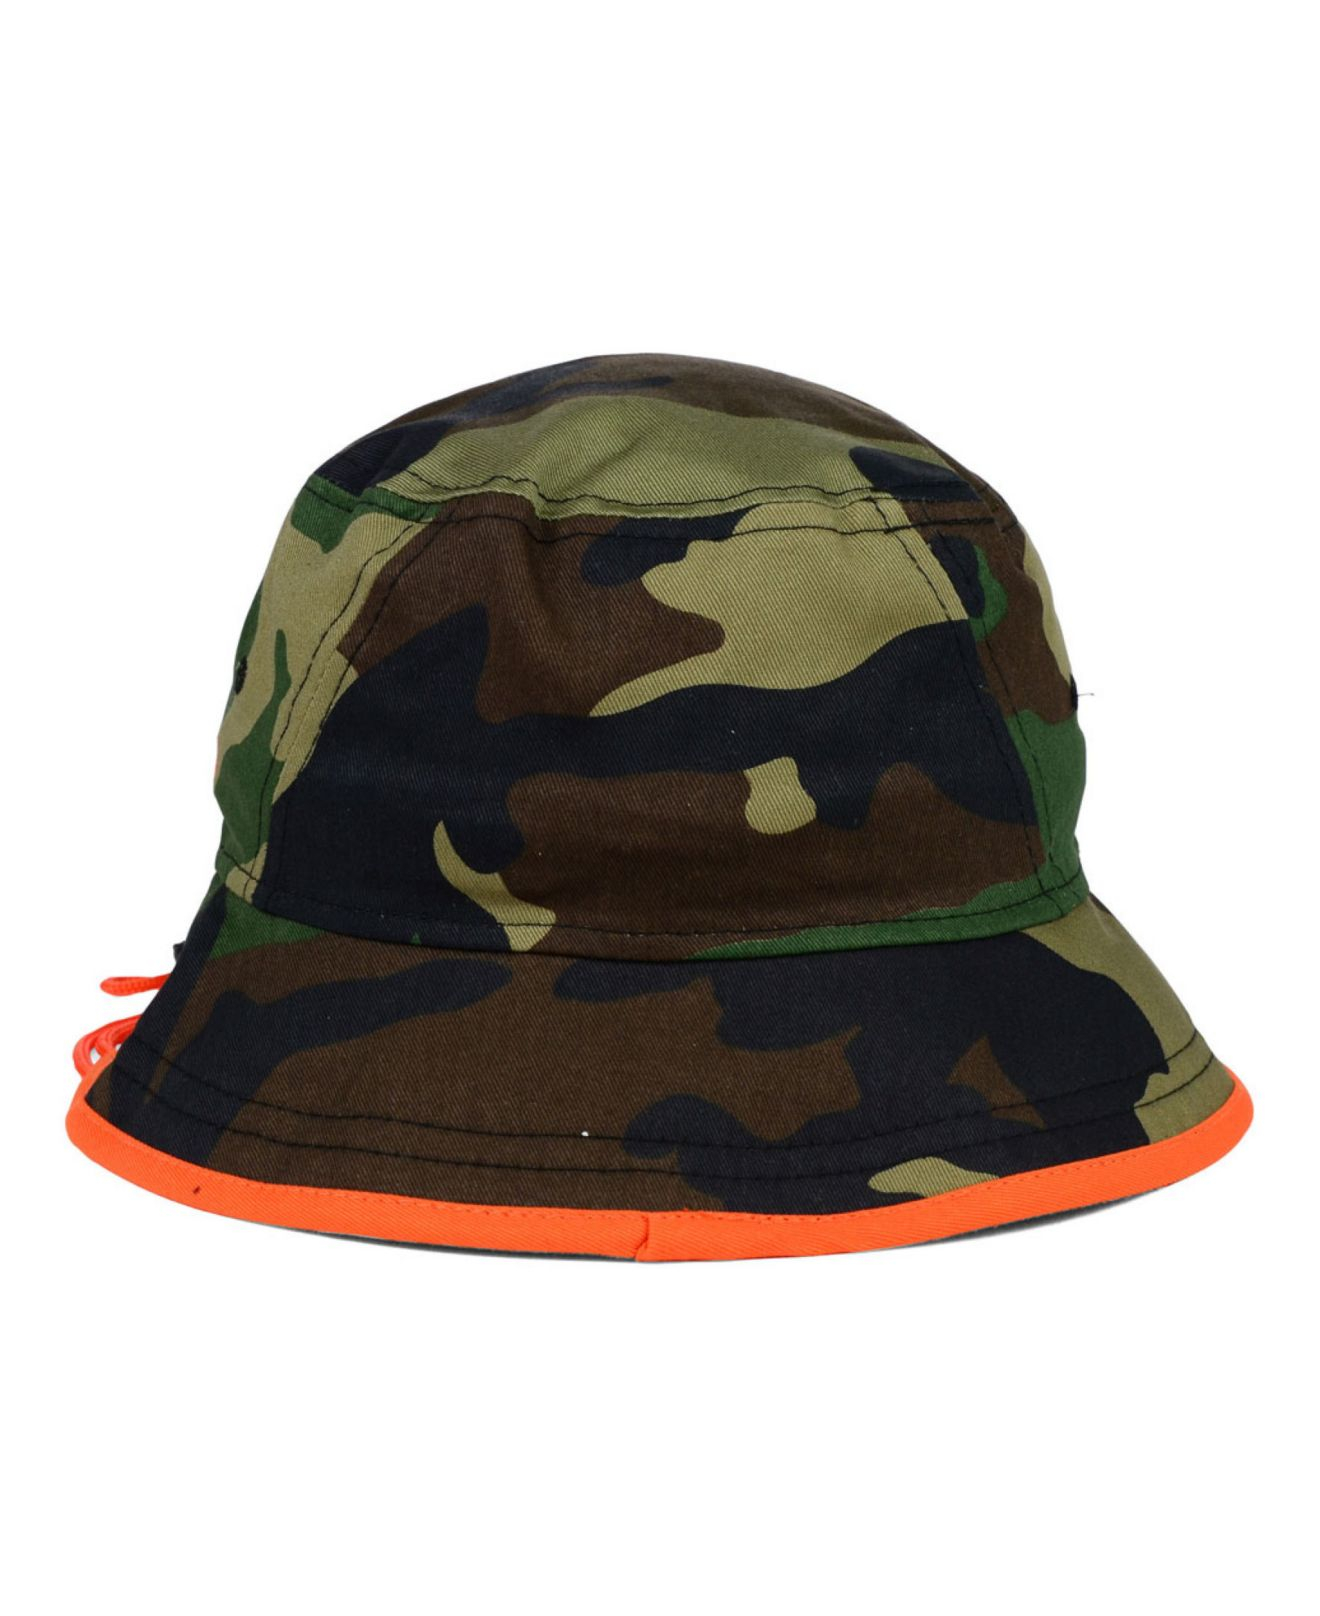 Lyst - Ktz Cleveland Browns Camo Pop Bucket Hat in Green for Men